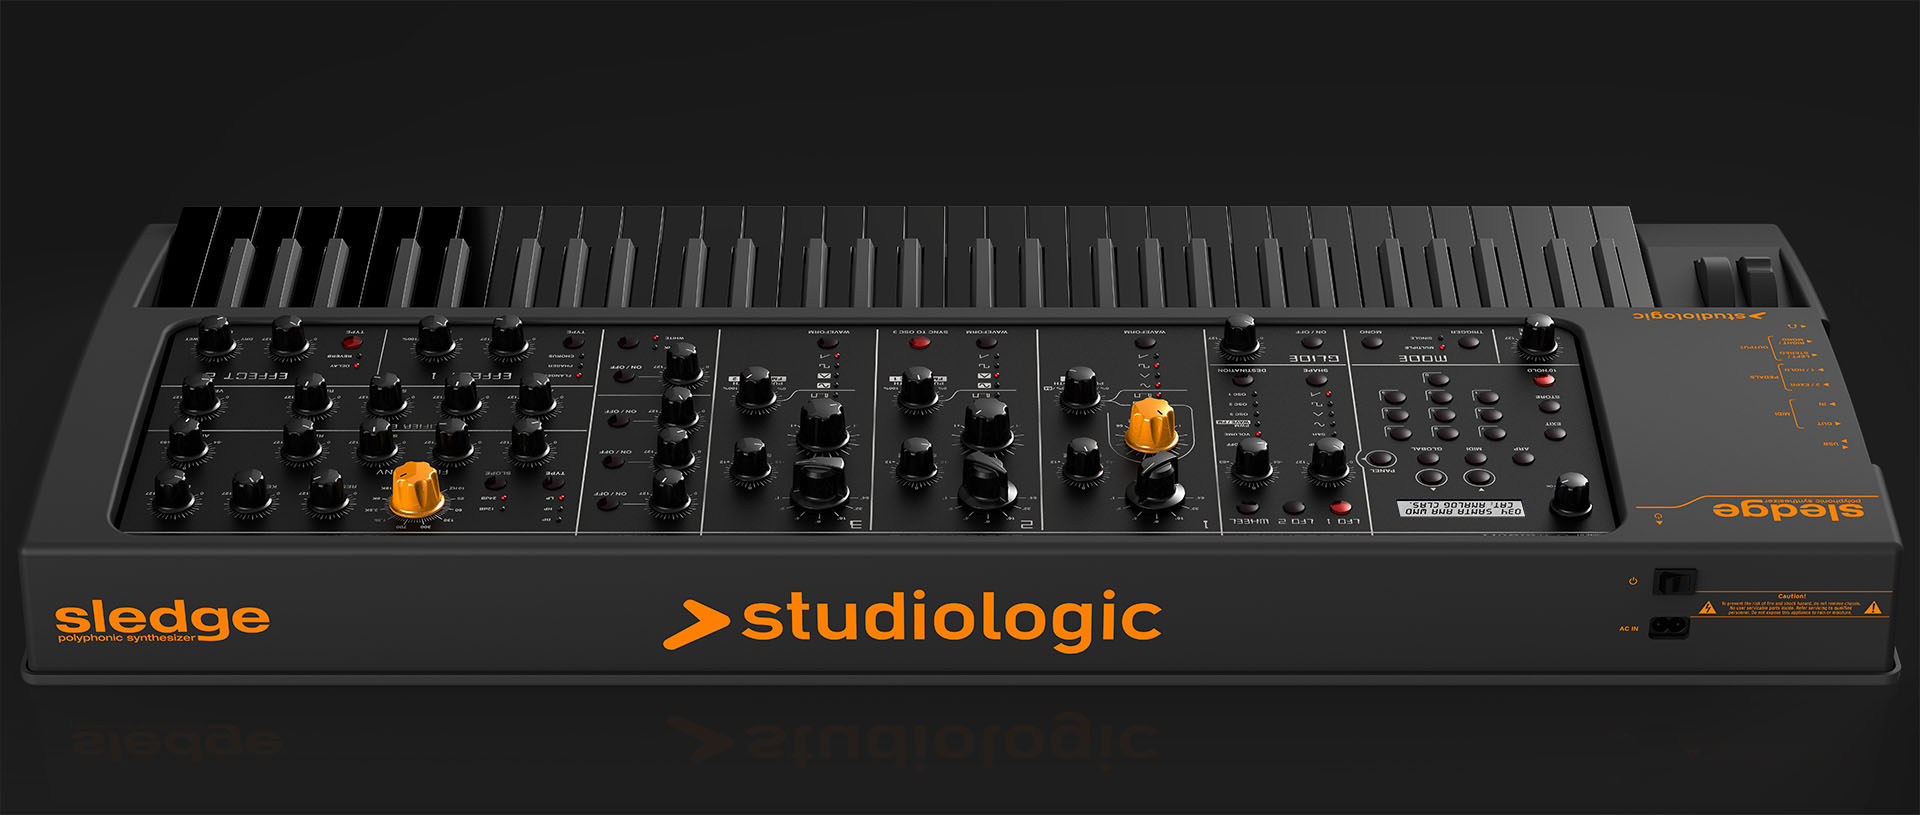 Studiologic Sledge Black Edition - SynthÉtiseur - Variation 1